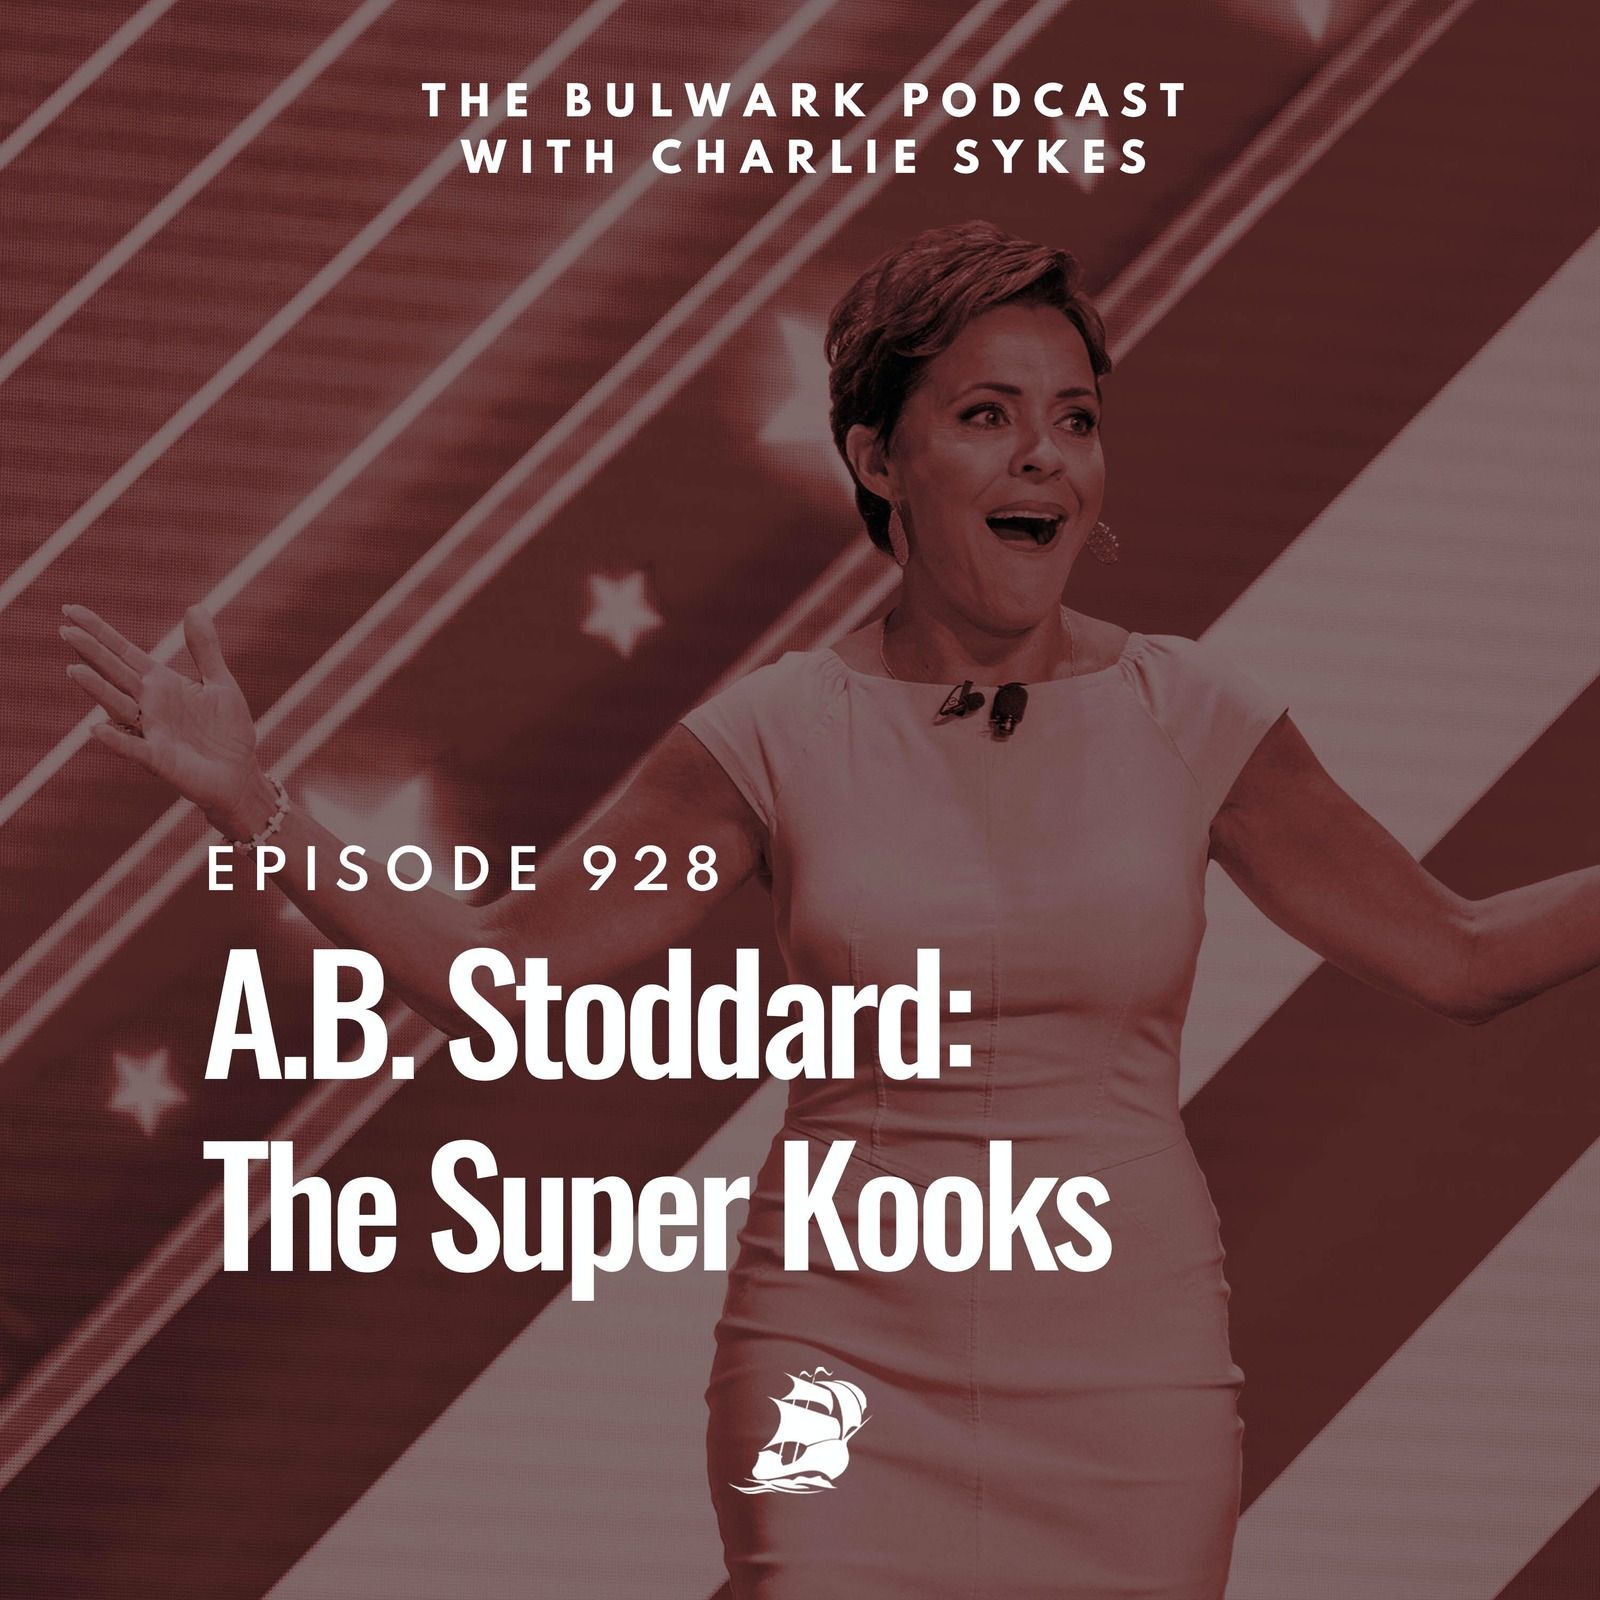 A.B. Stoddard: The Super Kooks by The Bulwark Podcast